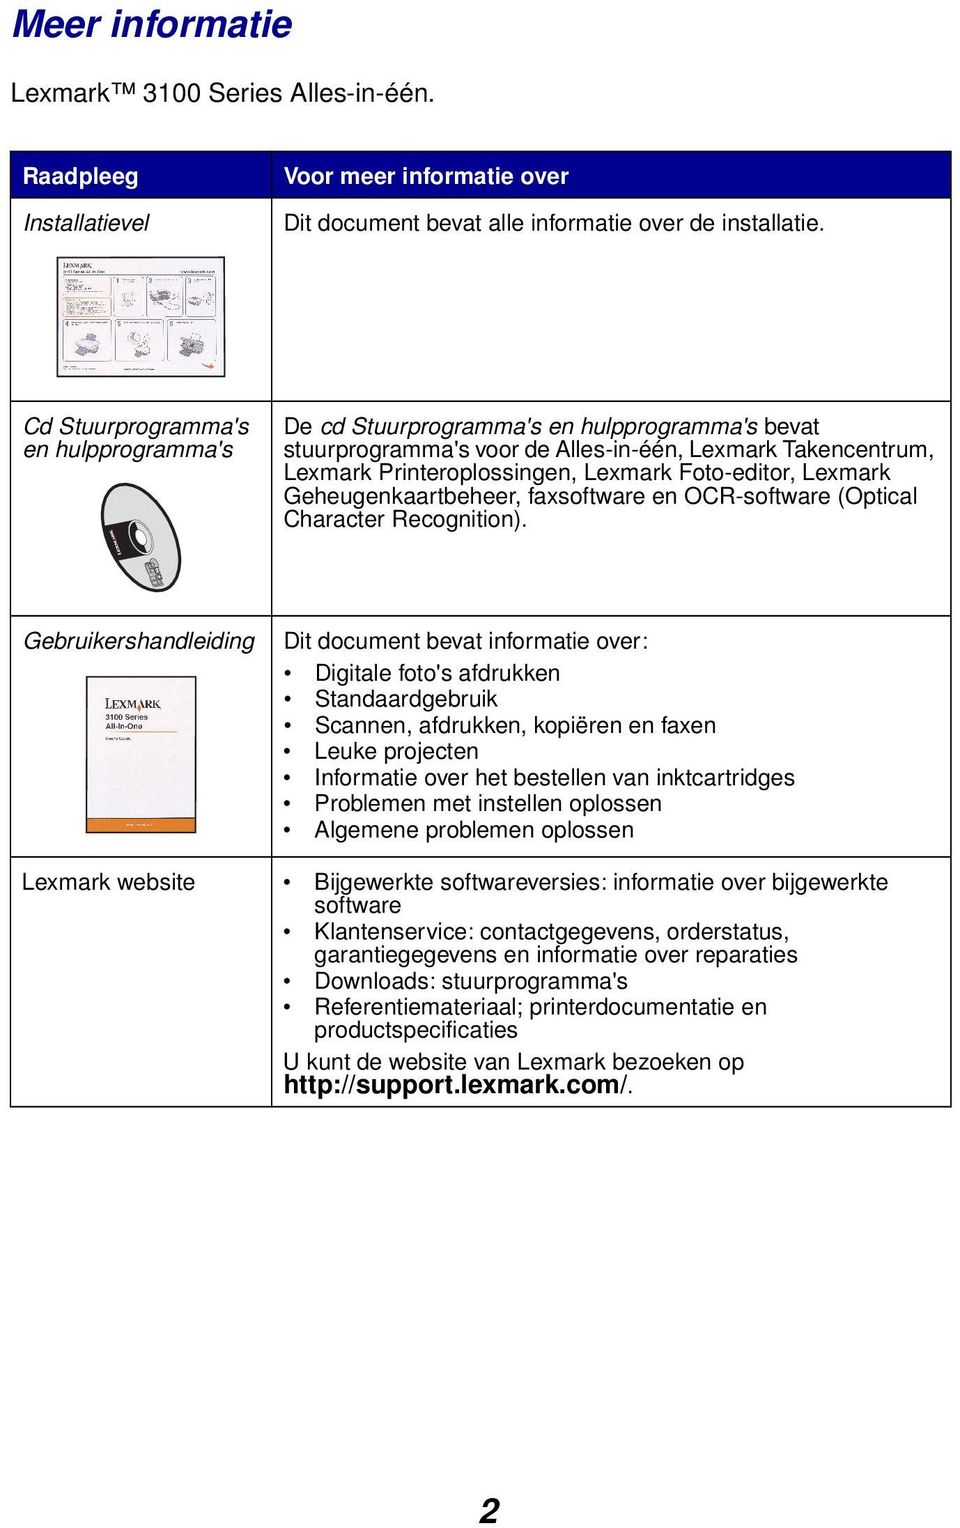 Lexmark Geheugenkaartbeheer, faxsoftware en OCR-software (Optical Character Recognition).